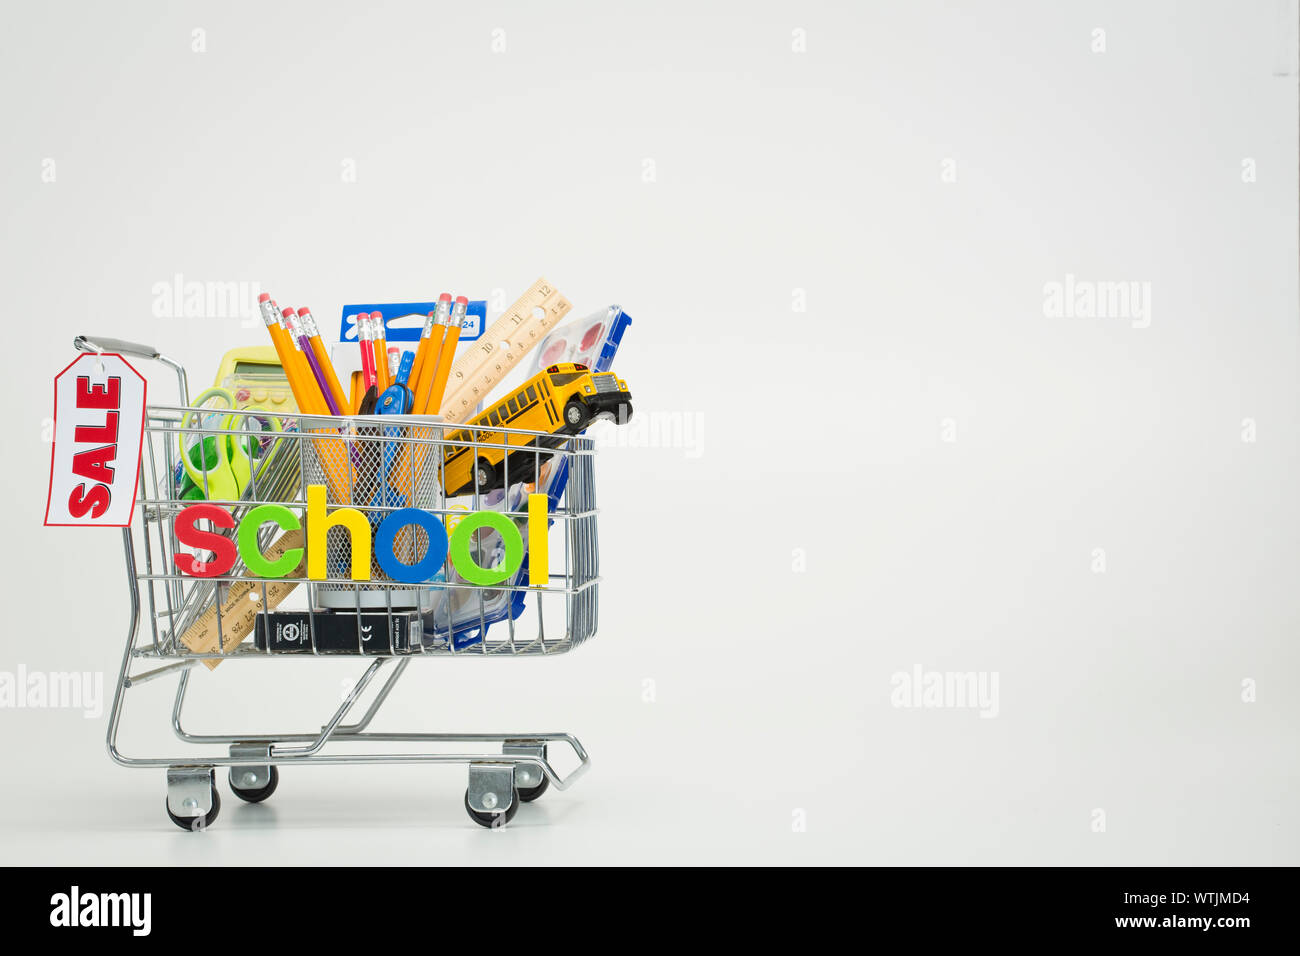 https://c8.alamy.com/comp/WTJMD4/school-supplies-in-shopping-cart-WTJMD4.jpg